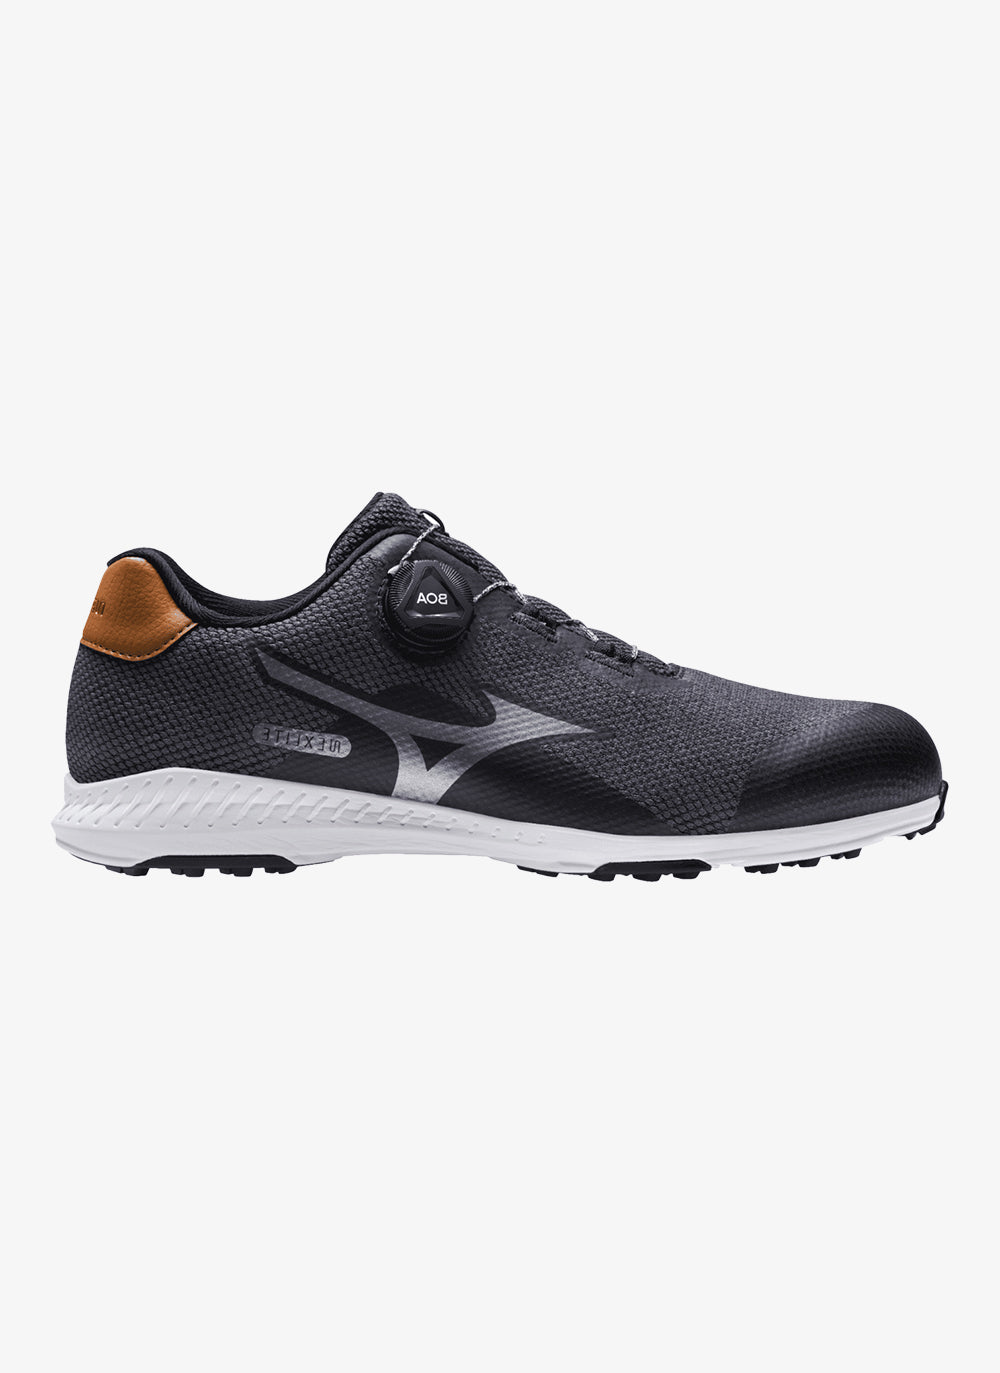 Mizuno Nexlite 008 BOA Golf Shoes 51GM2120 | Black